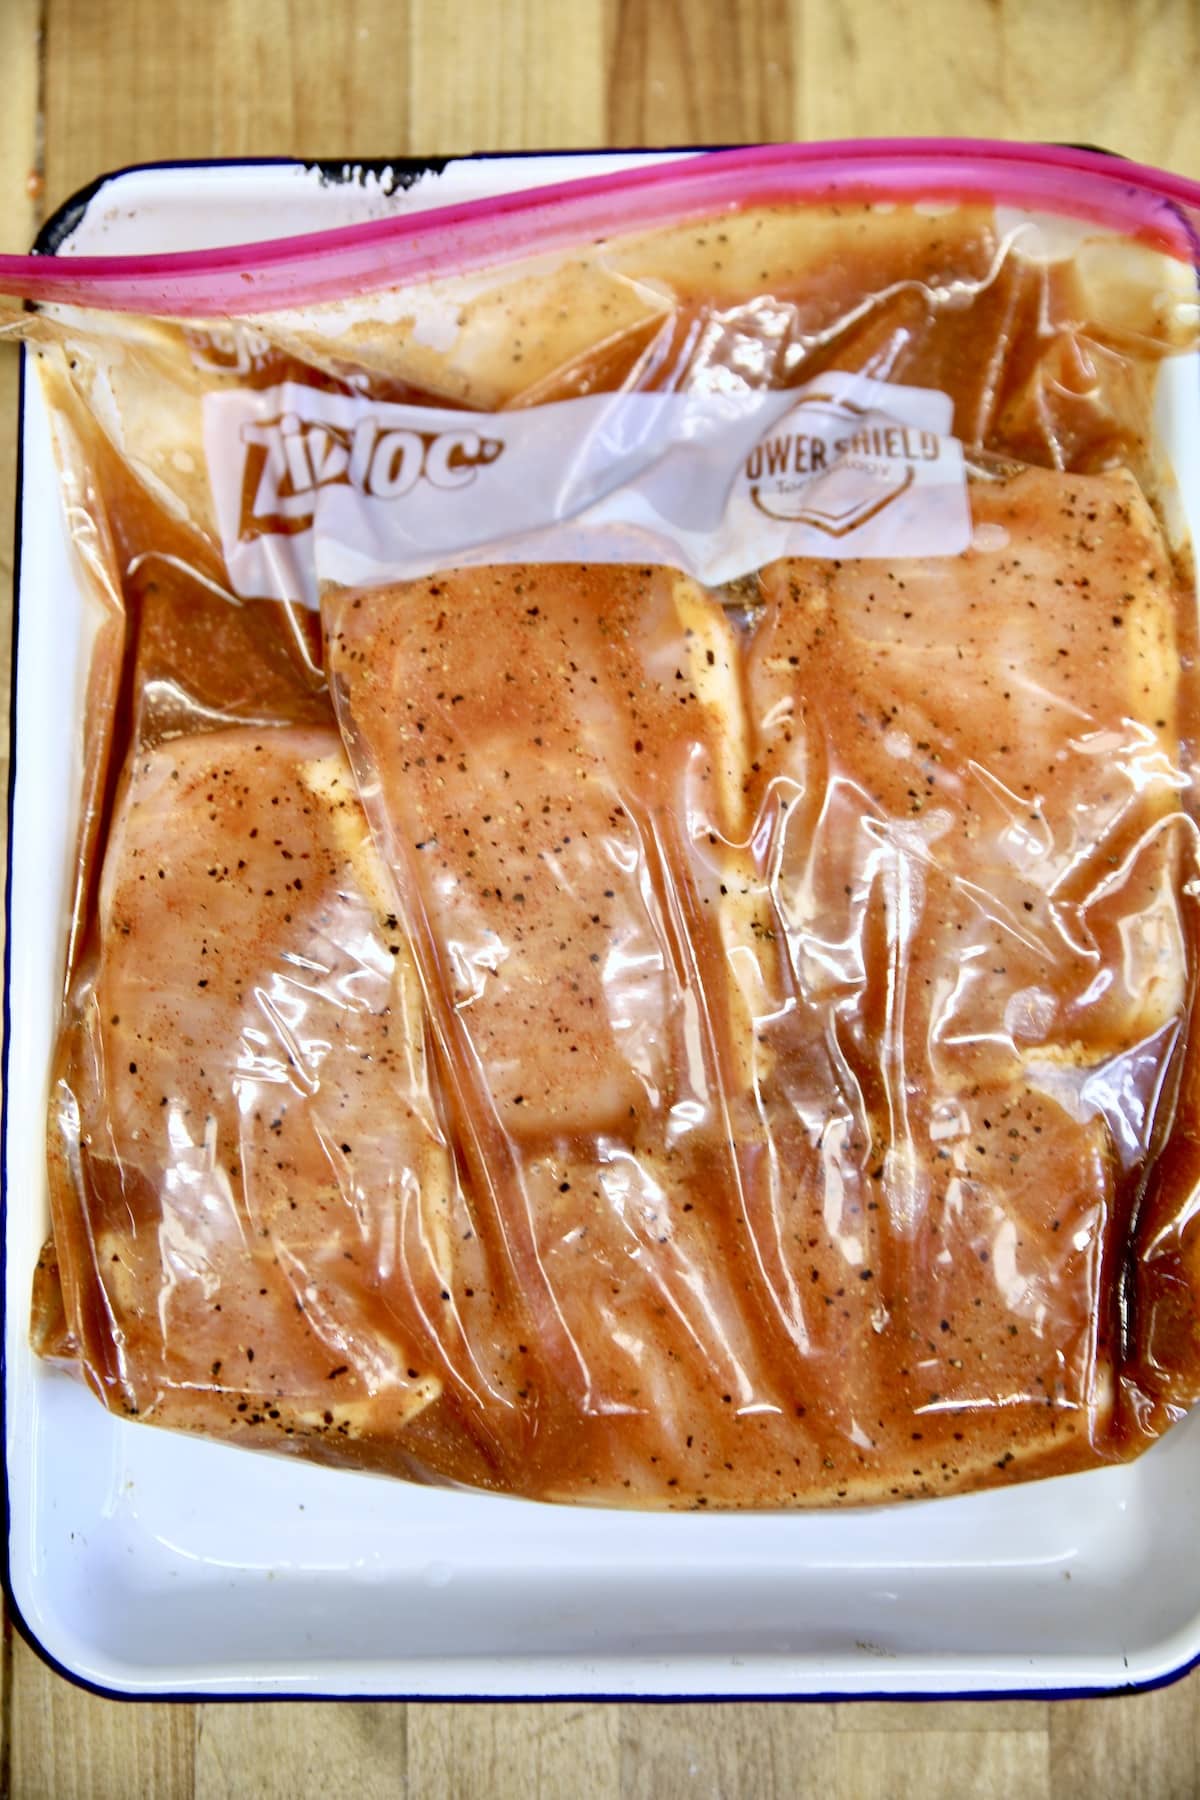 Marinating boneless pork chops in a ziploc bag.